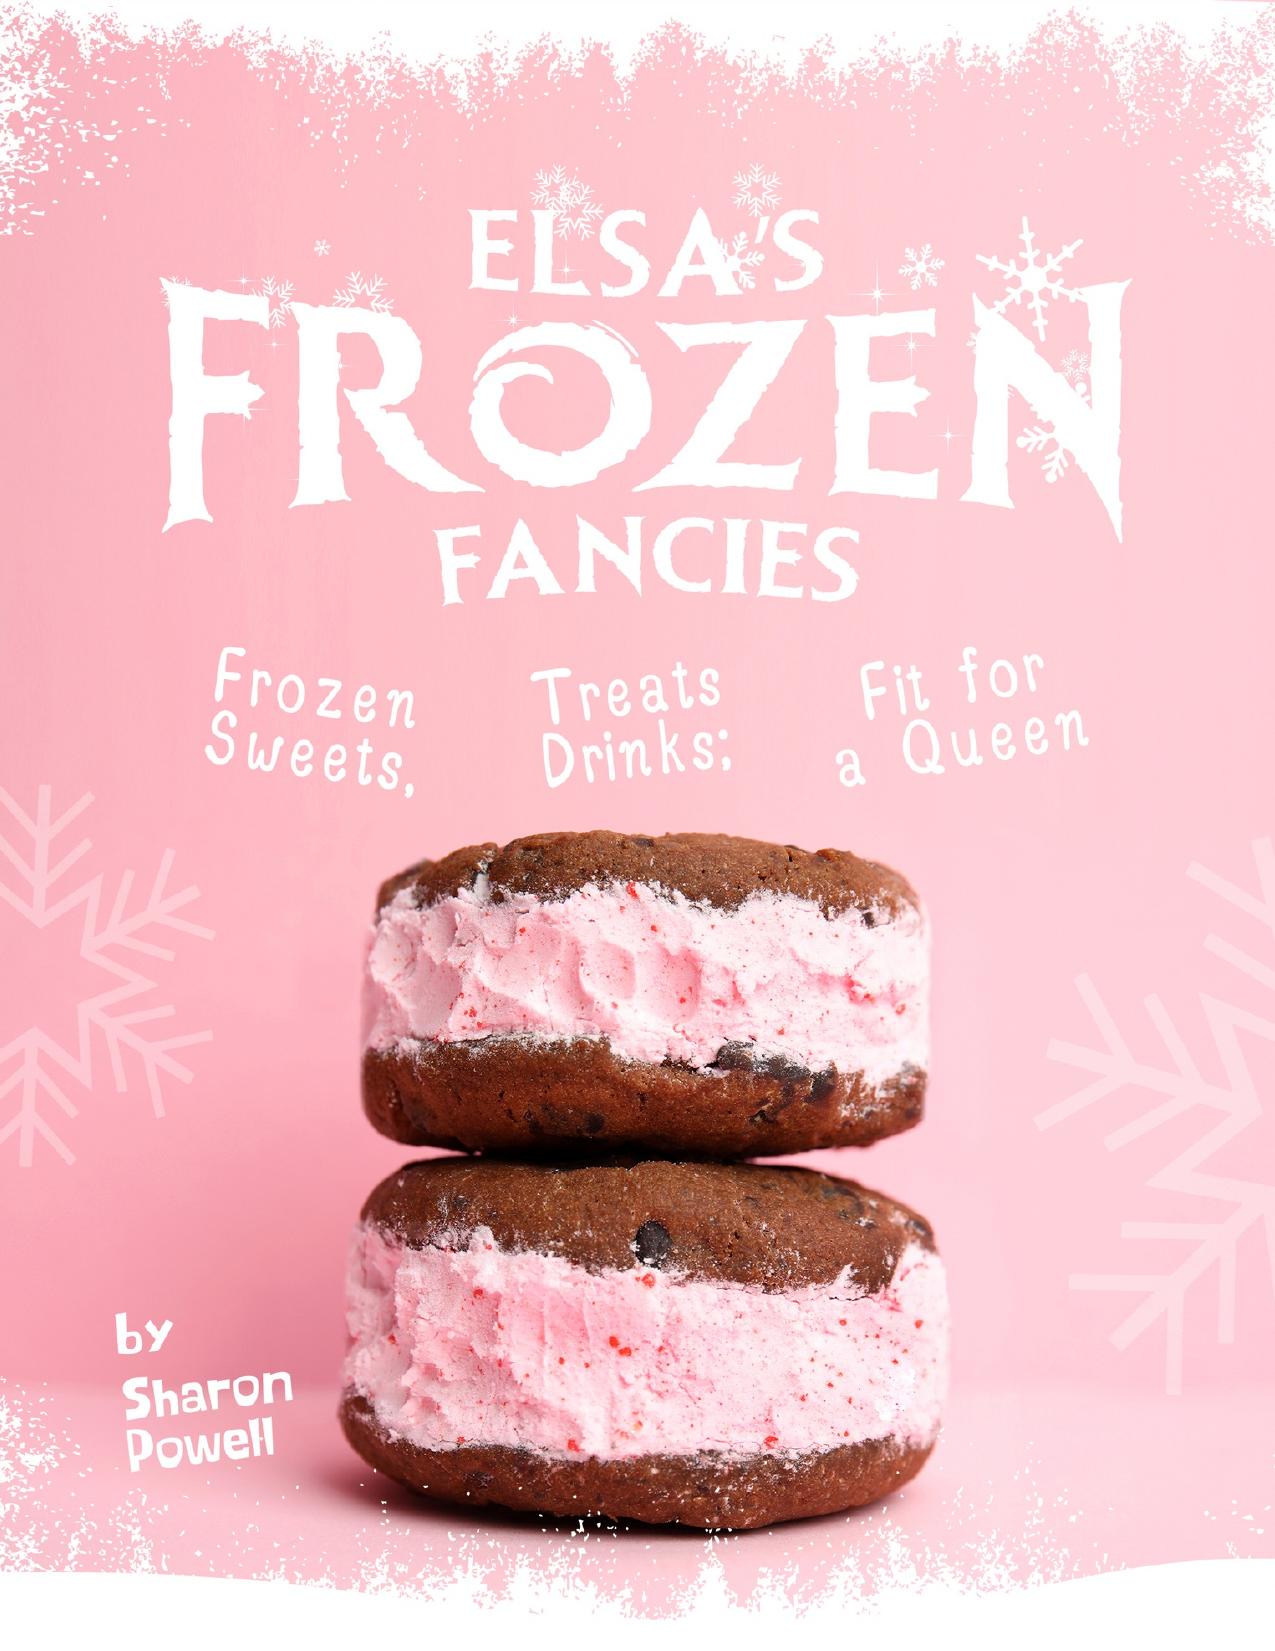 Elsa's Frozen Fancies: Frozen Sweets, Treats Drinks; Fit for a Queen by Powell Sharon